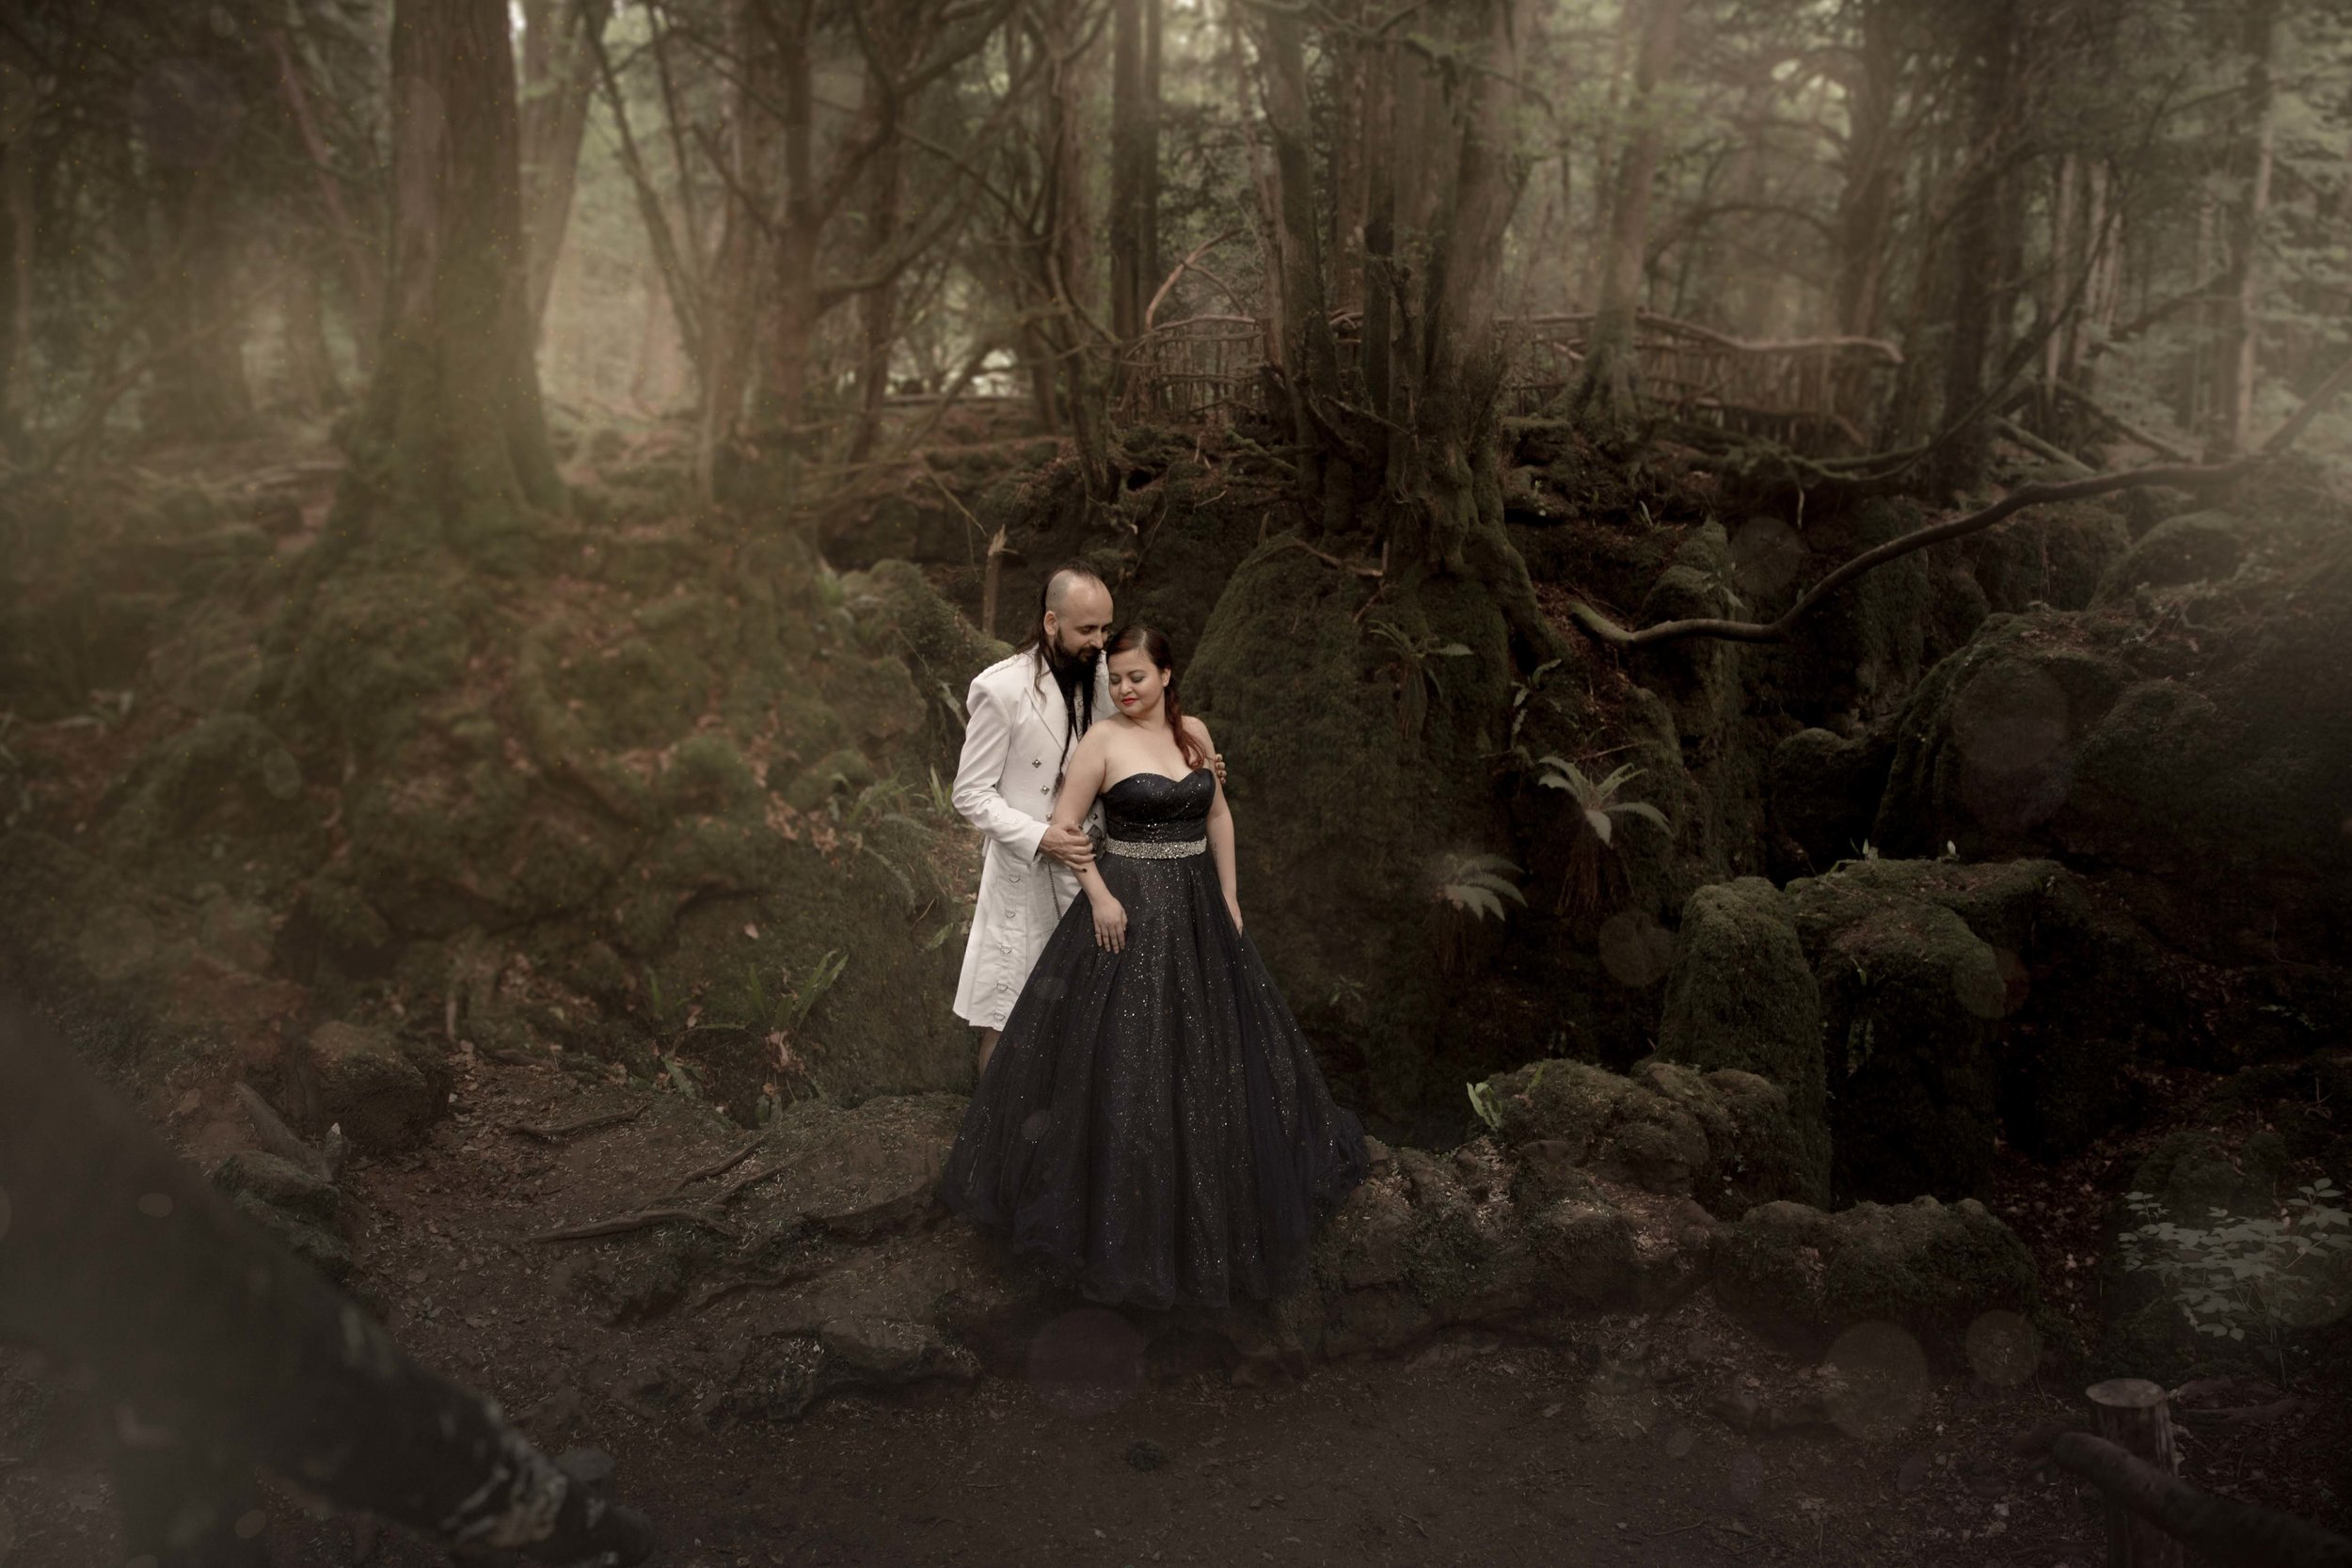 Puzzlewood-fairytale-fairy-forest-wood-prewedding-photoshoot-star-wars-couple-shoot-asian-wedding-photographer-natalia-smith-photography-7.jpg